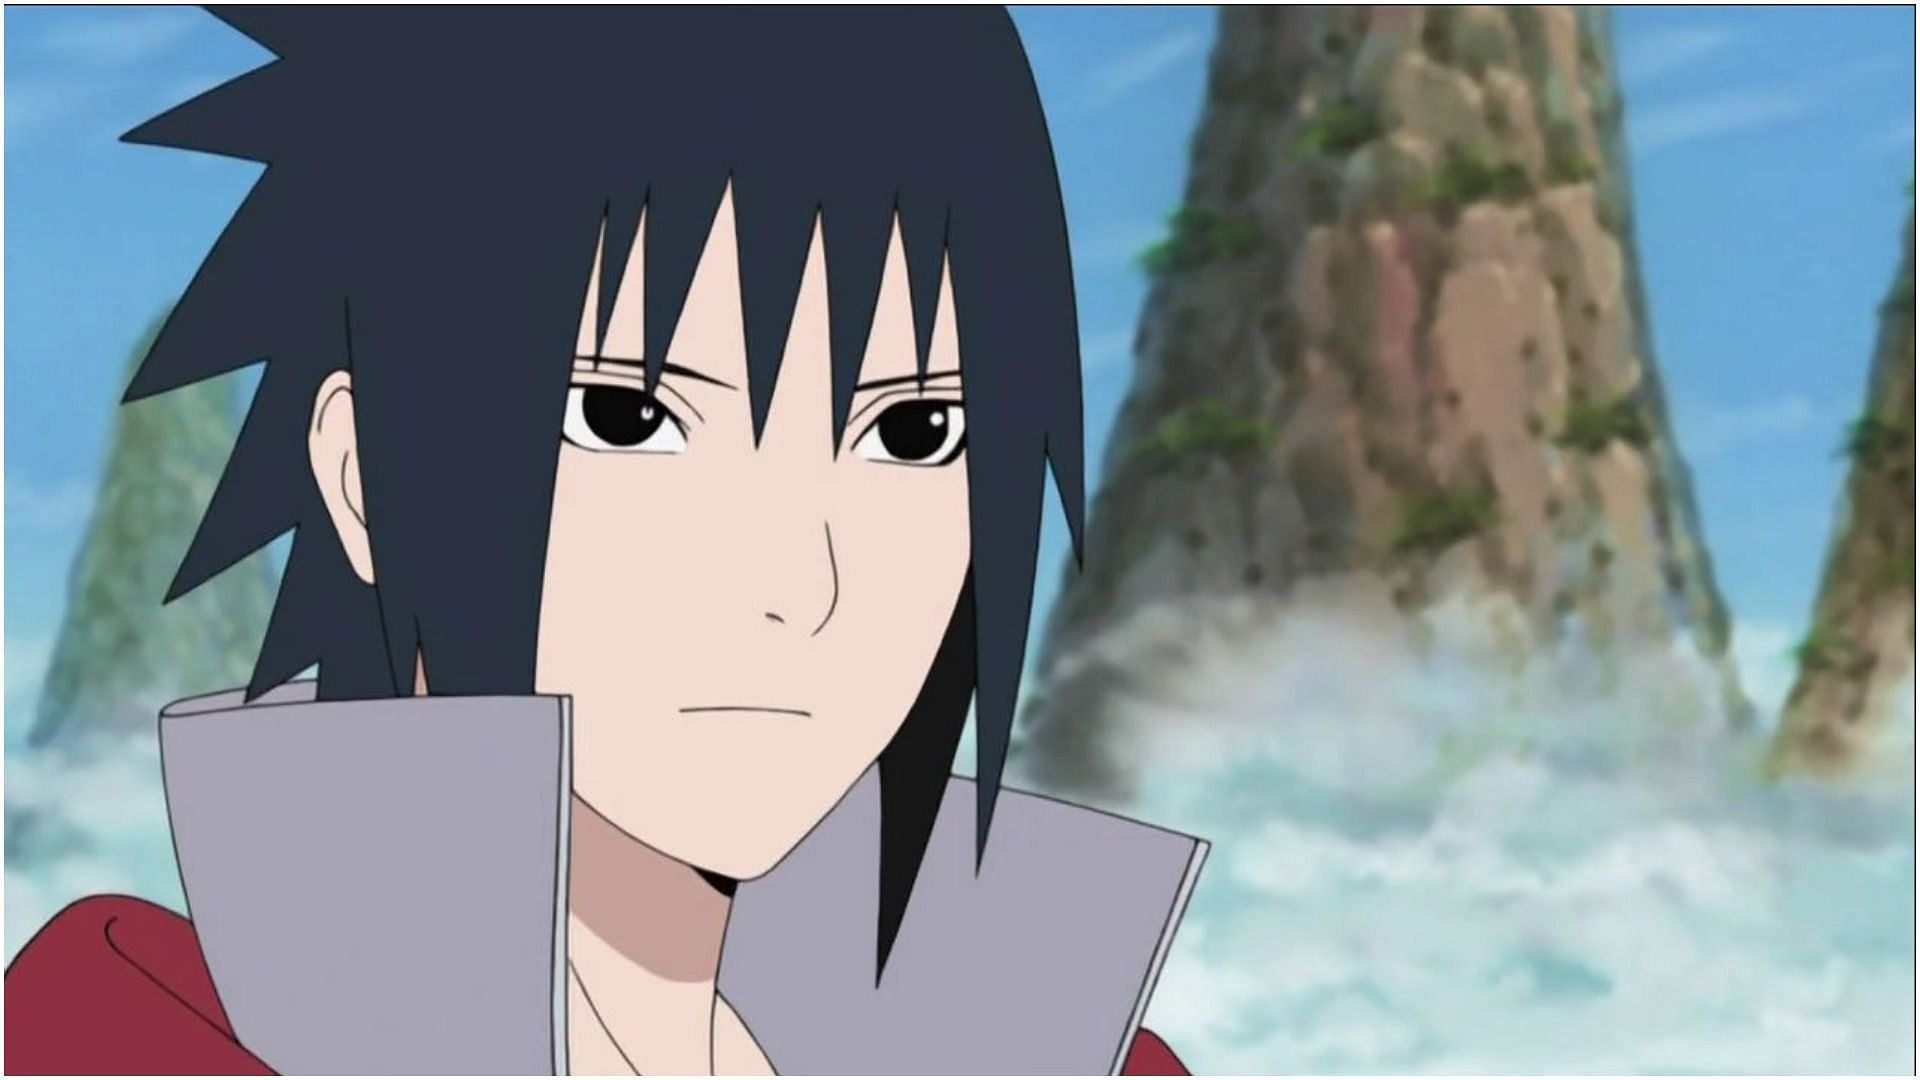 Sasuke Uchiha as shown in the anime (Image via Naruto)